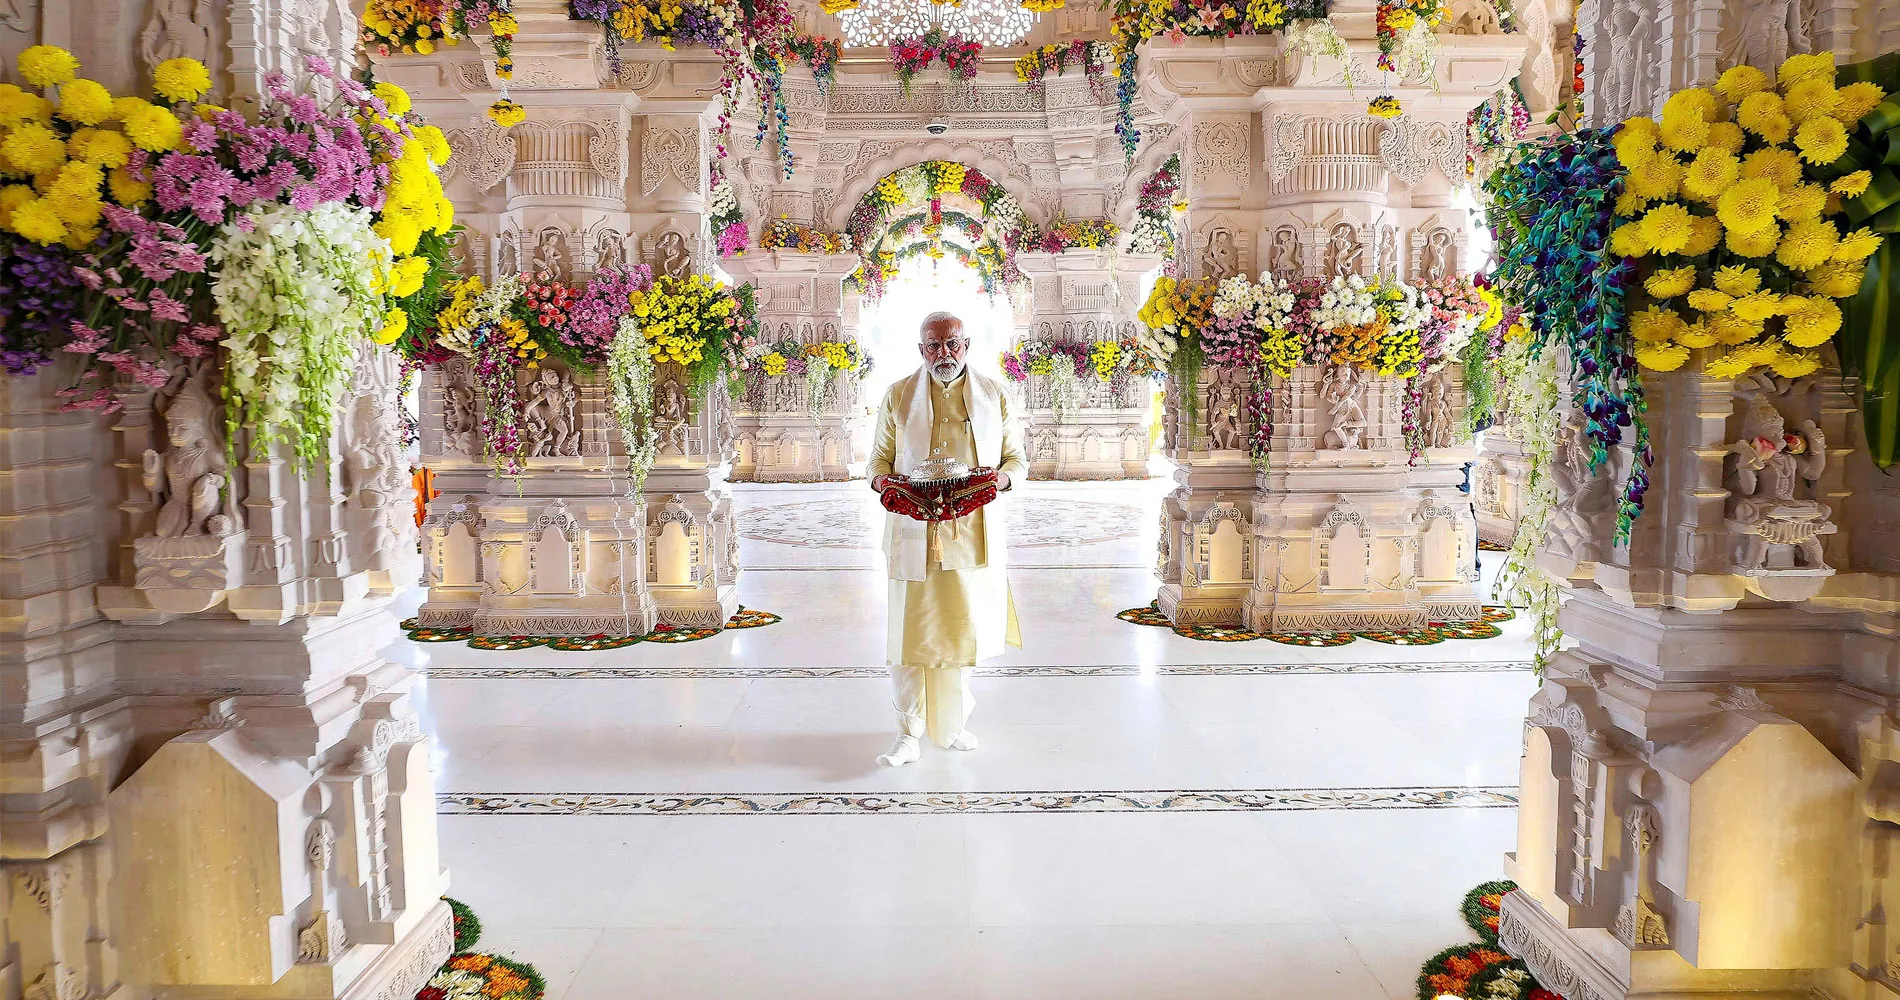 Modi’s Re-Election Plan: The Ram Temple, Hindu Nationalism and Anti-Muslim Rhetoric